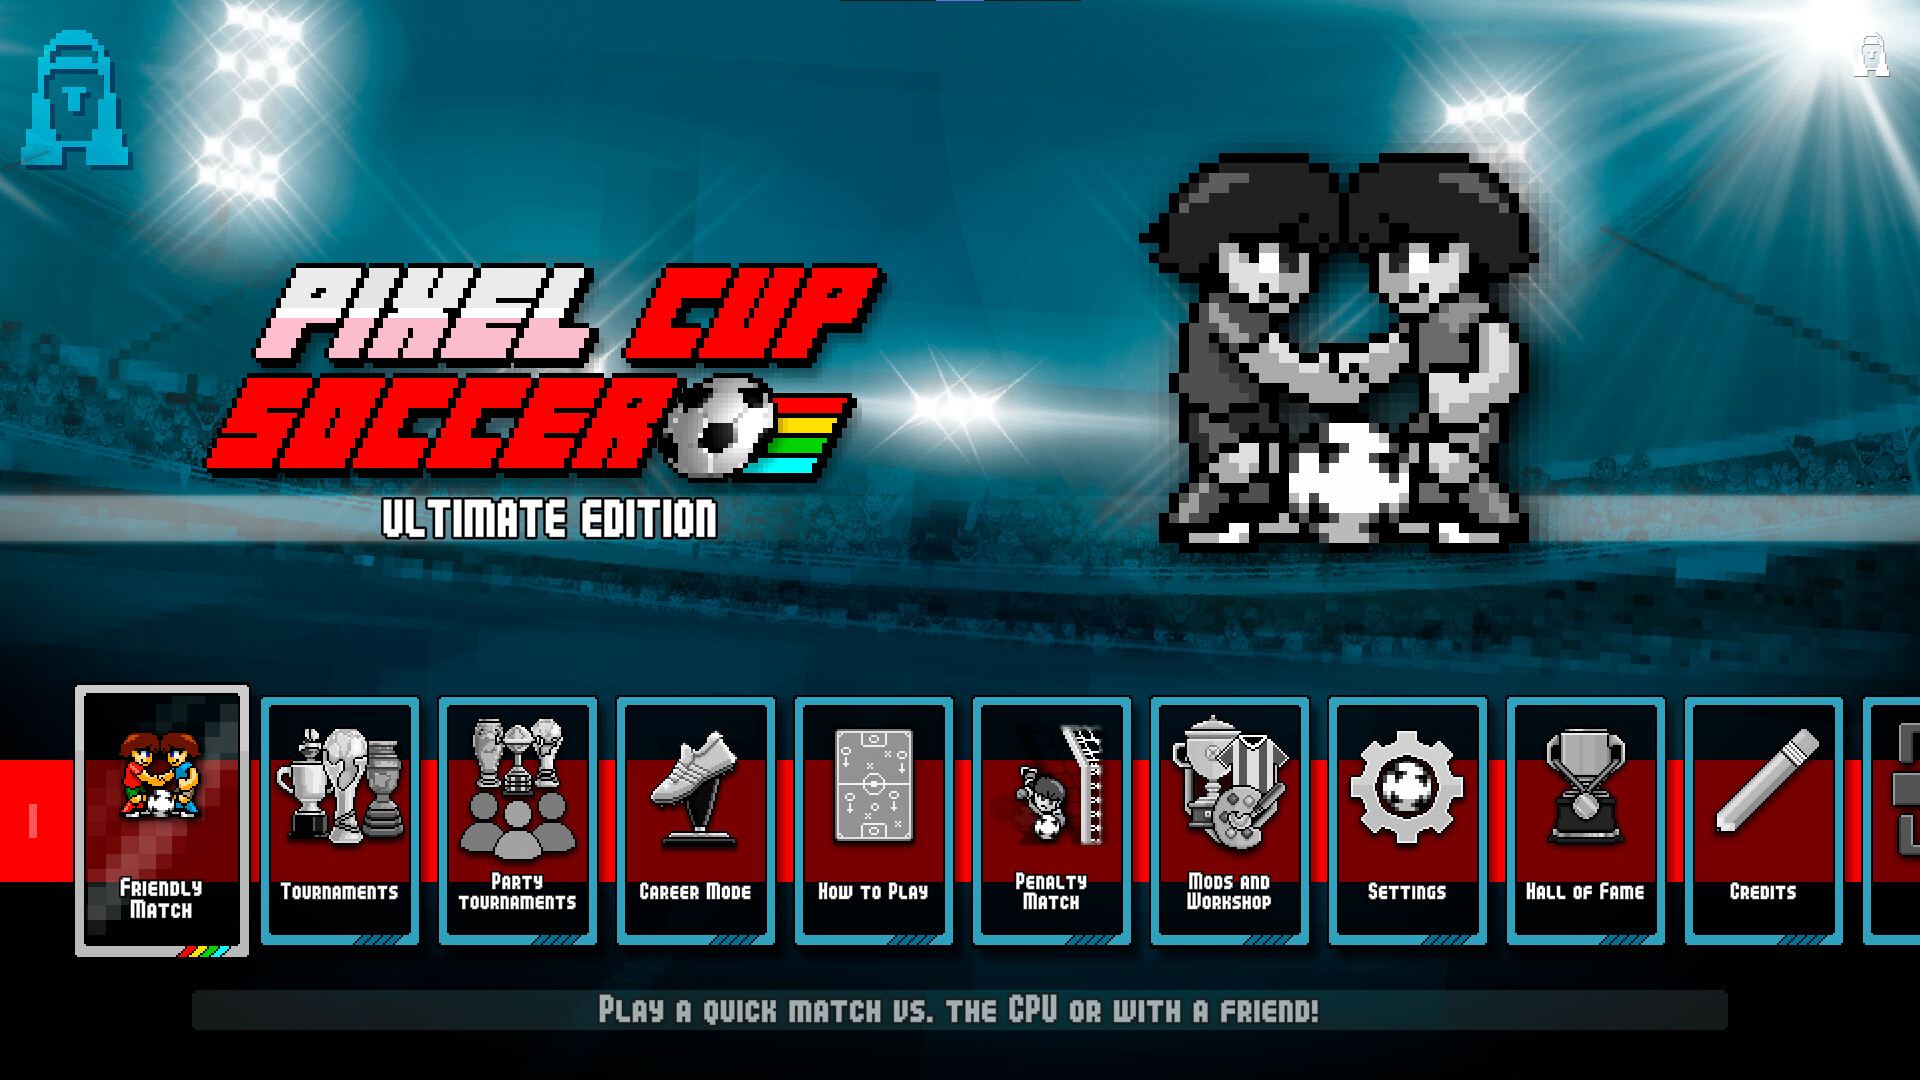 像素足球杯 终极版 Pixel Cup Soccer – Ultimate Edition Build.9969481 官中插图18